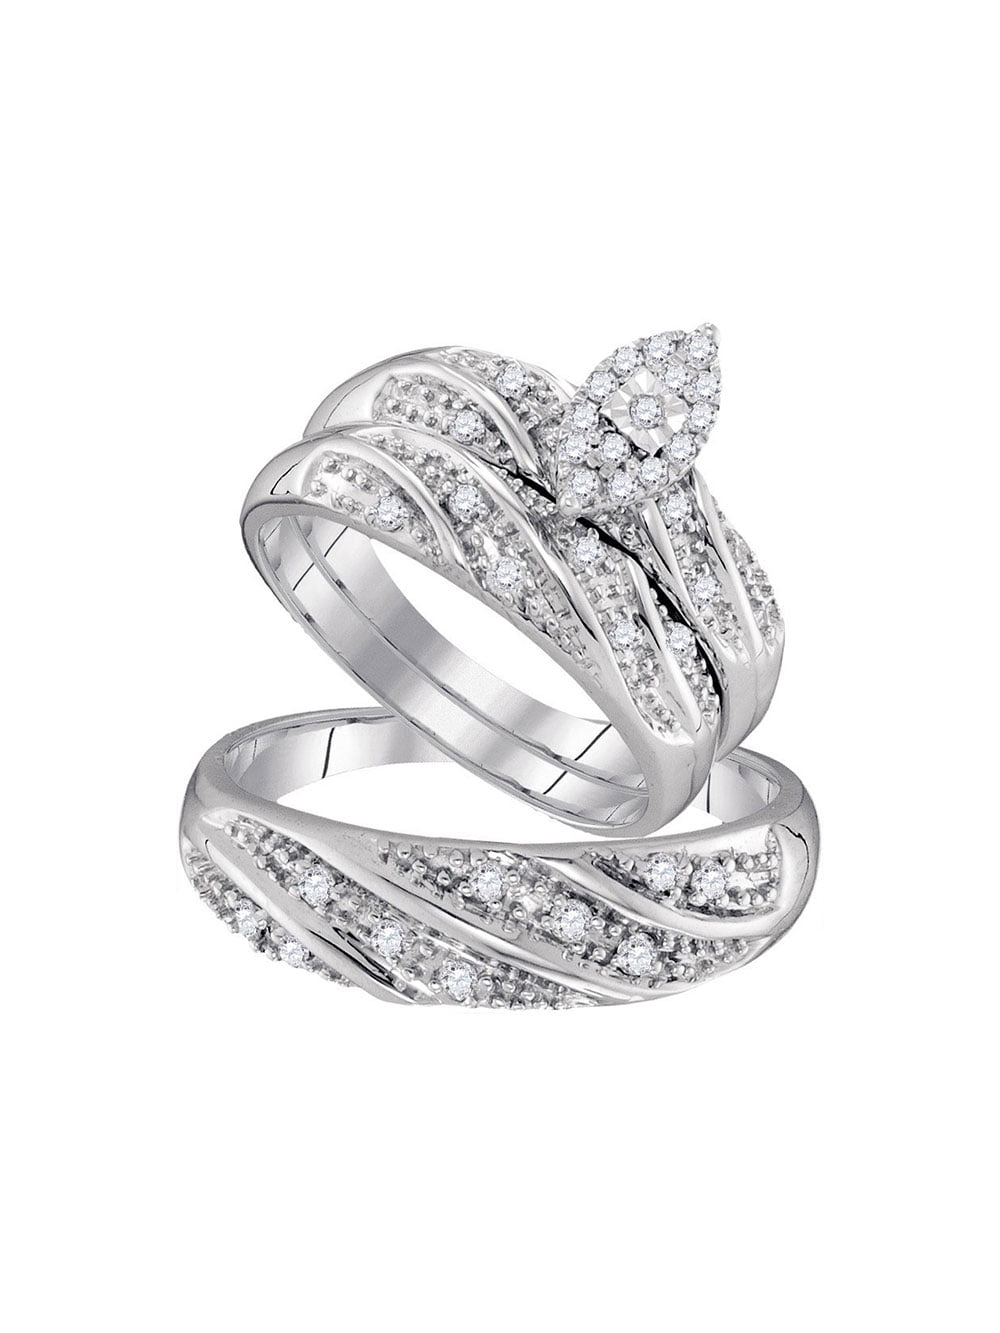 Details about   14K White Gold Finish Round Cut Diamond Ladie's Engagement & Wedding Bridal Set 